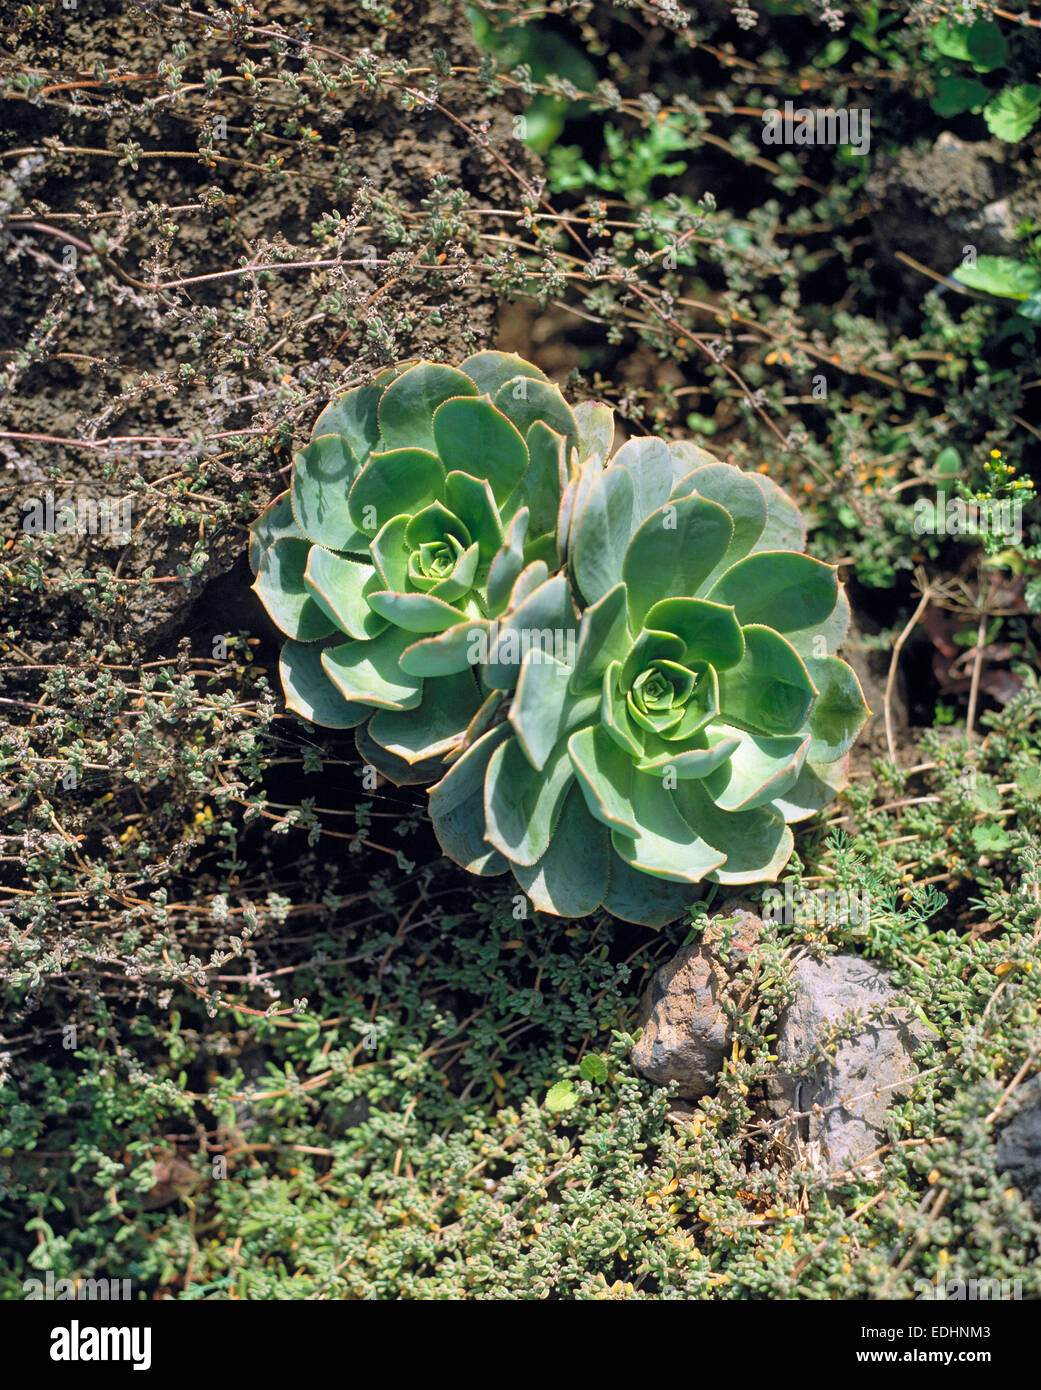 Natur, Pflanzenwelt, Pflanze, Dickblattgewaechs, Rosettenpflanze, Aeonium canariense, Eonio de las Canarias, Bejeque Stock Photo